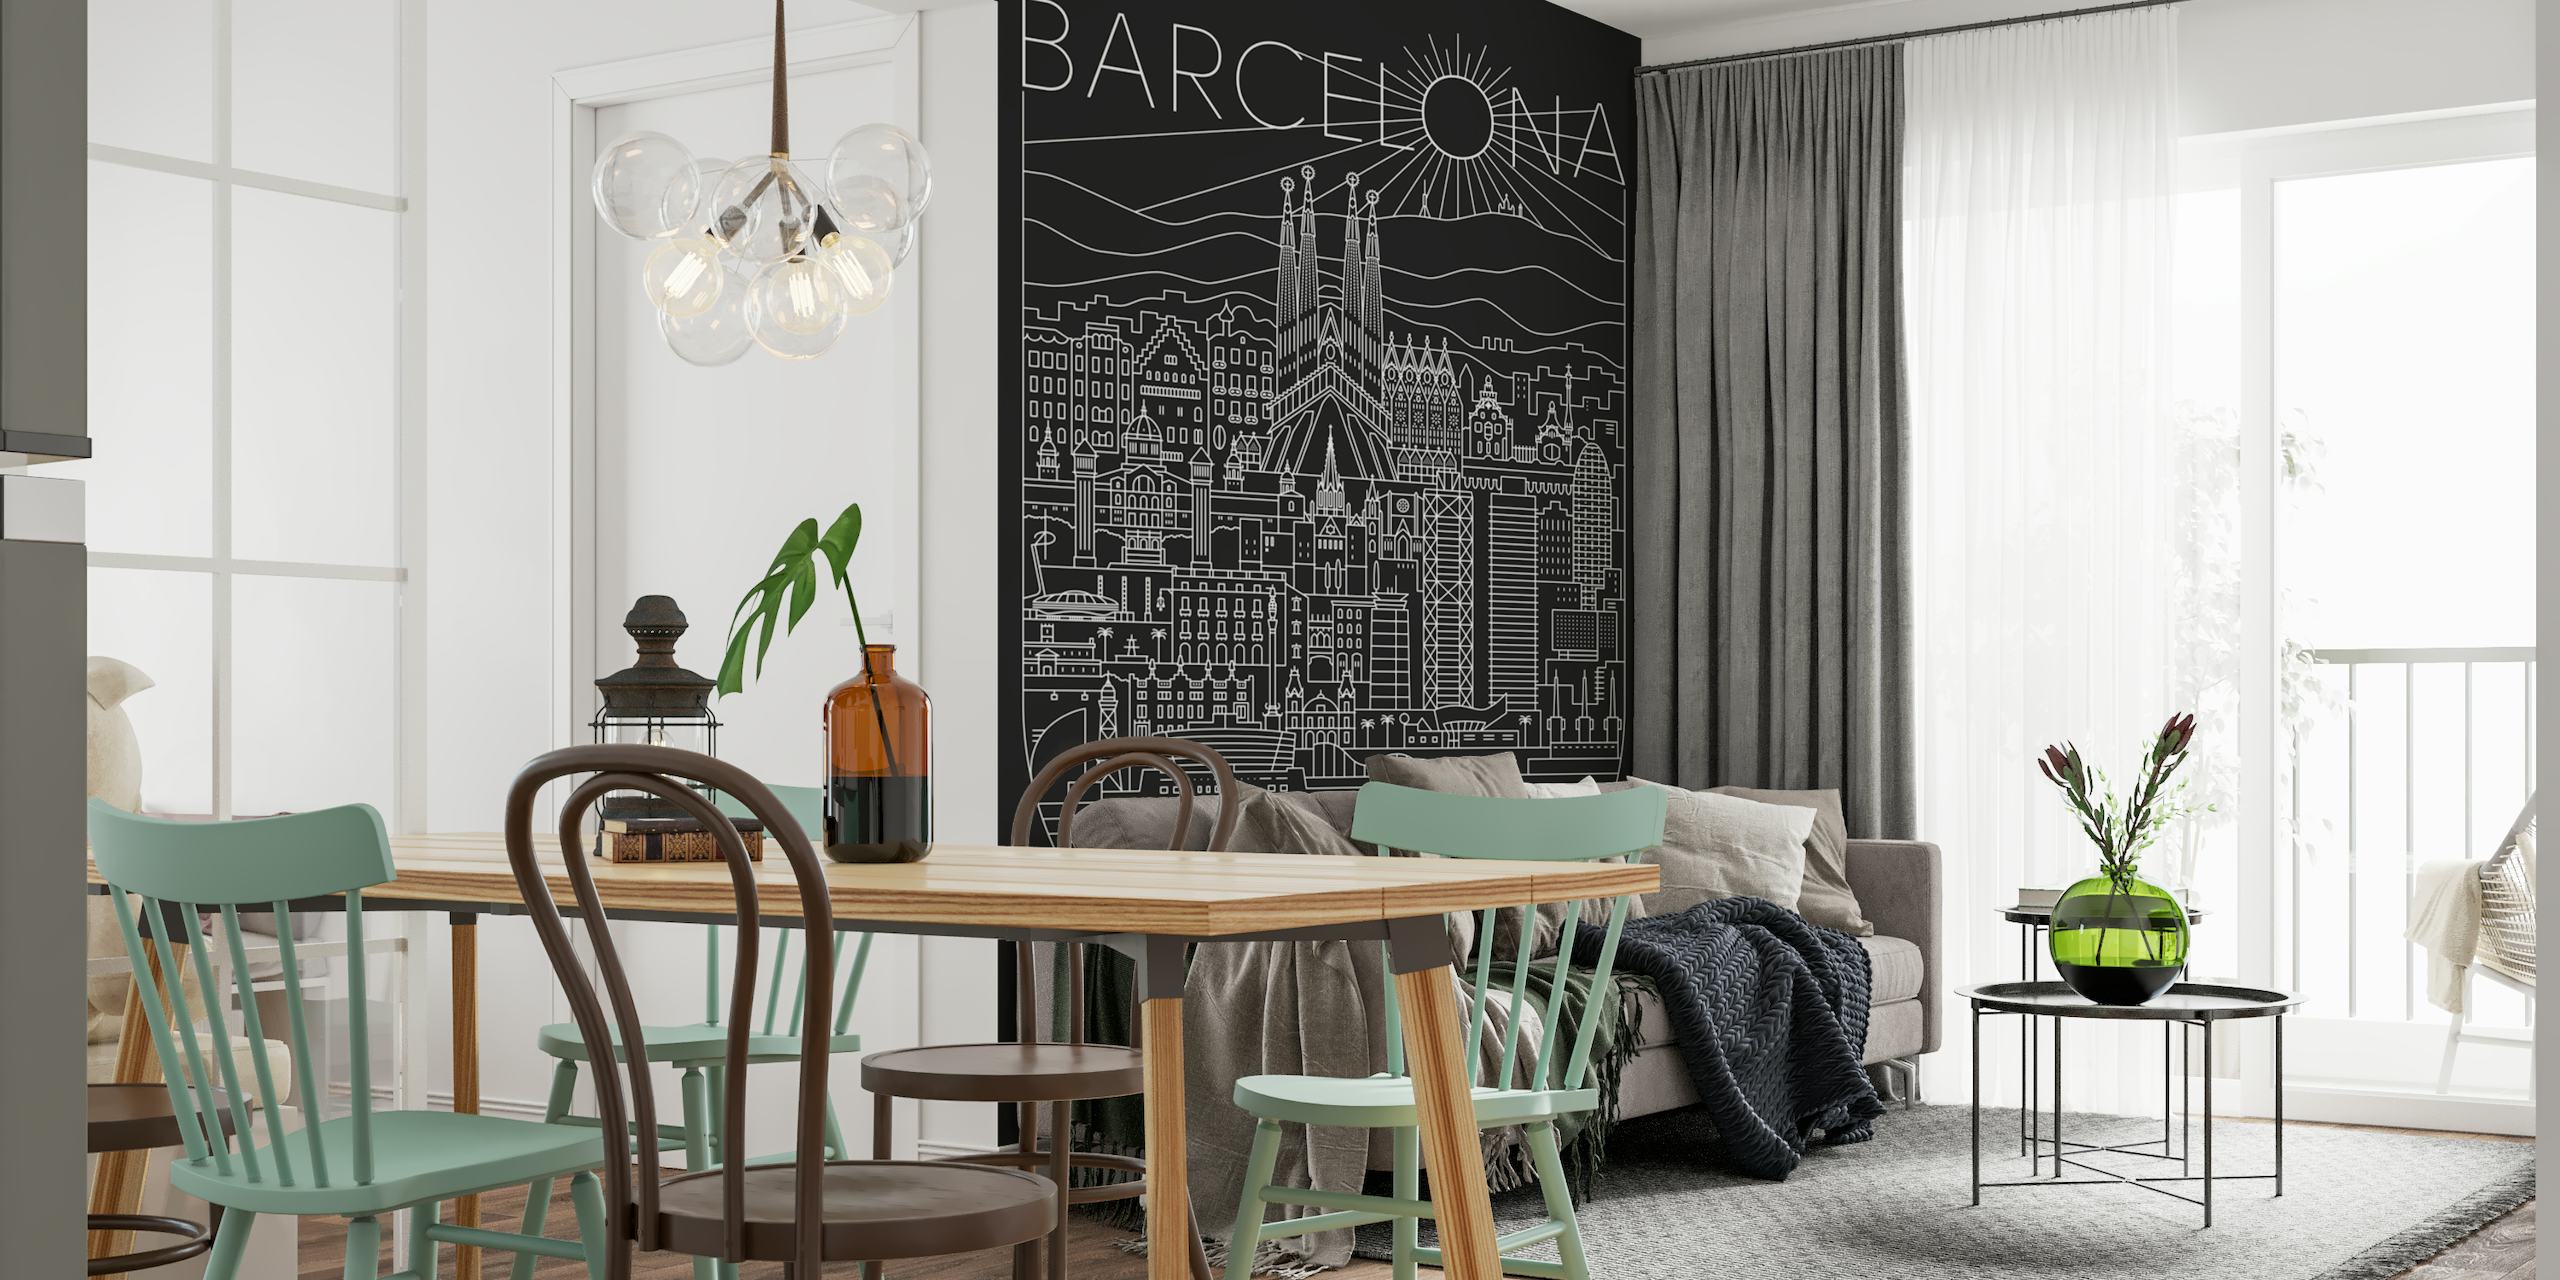 Line art wall mural depicting Barcelona's cityscape with highlights like Sagrada Familia